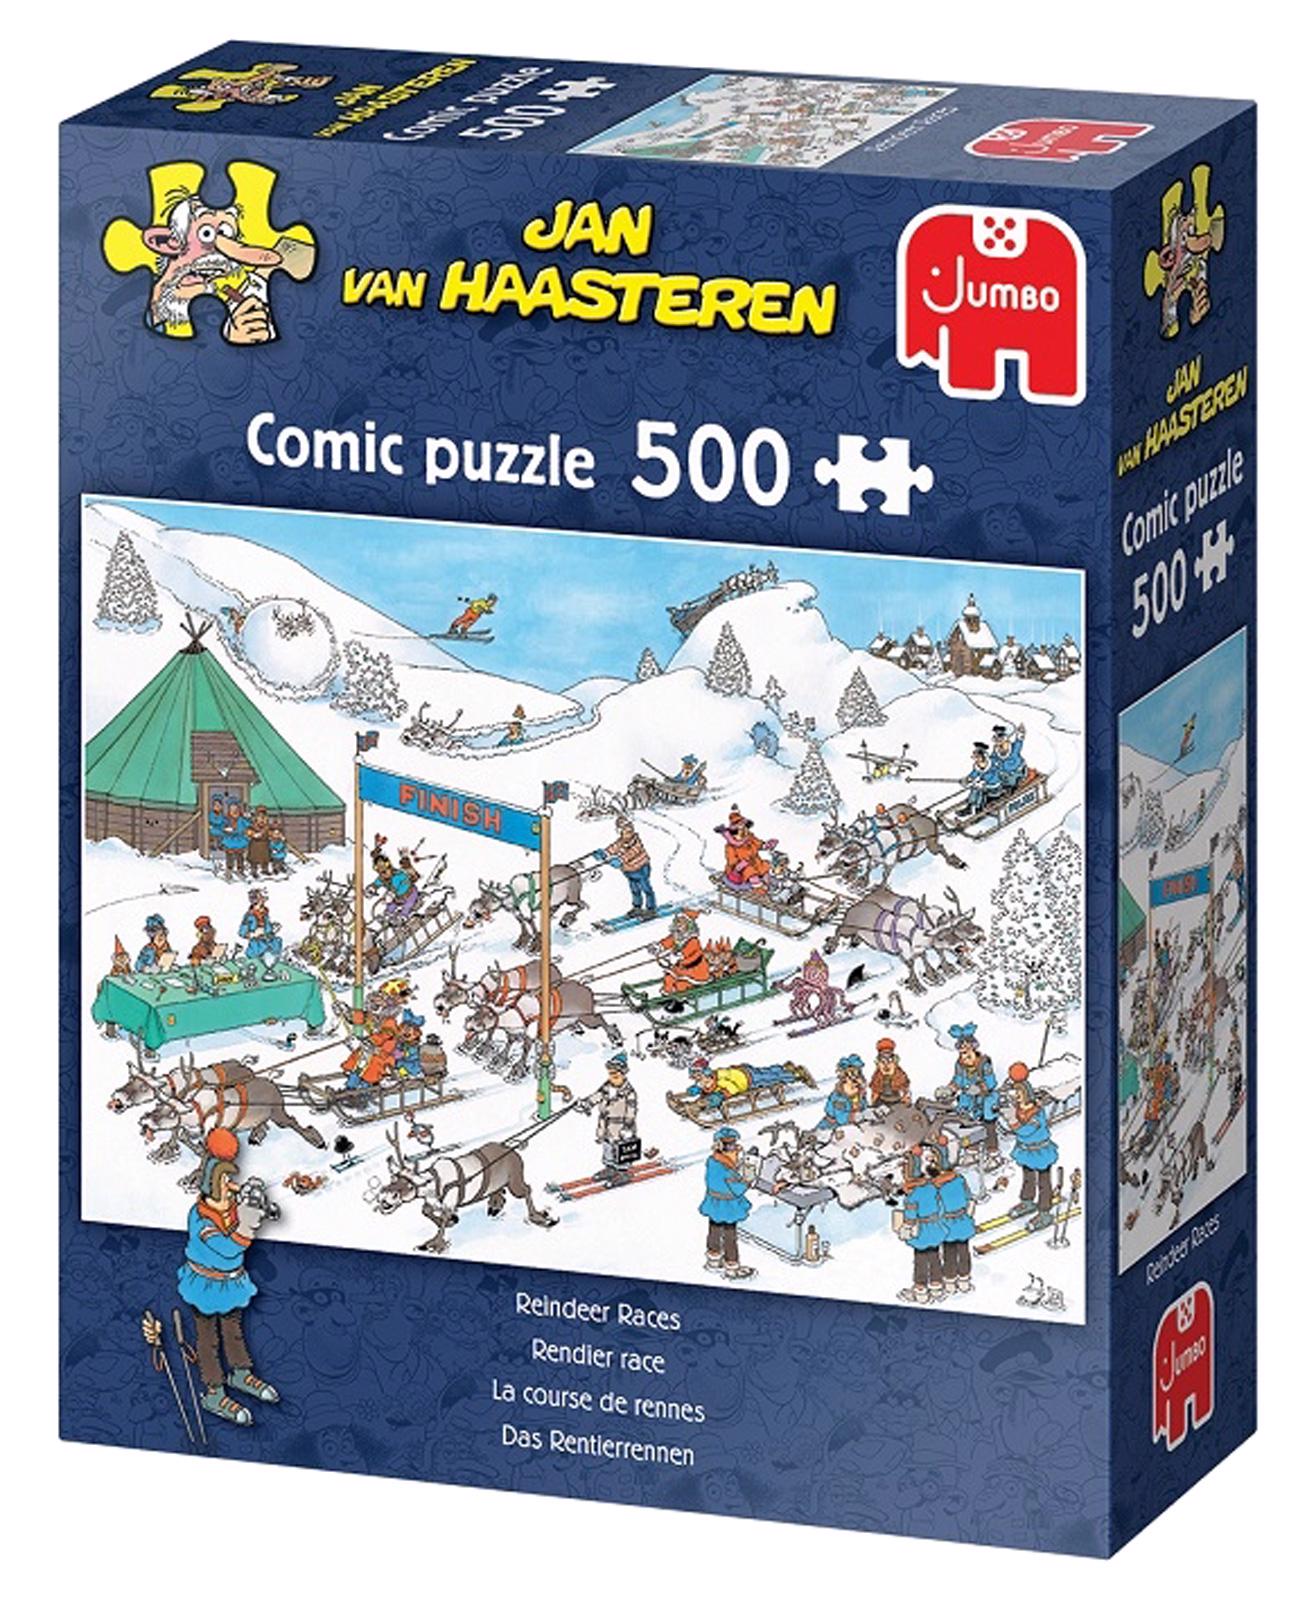 kans Whitney gras Puzzle Jan van Haasteren - Reindeer Races, 500 pieces | PuzzleWholesale.eu